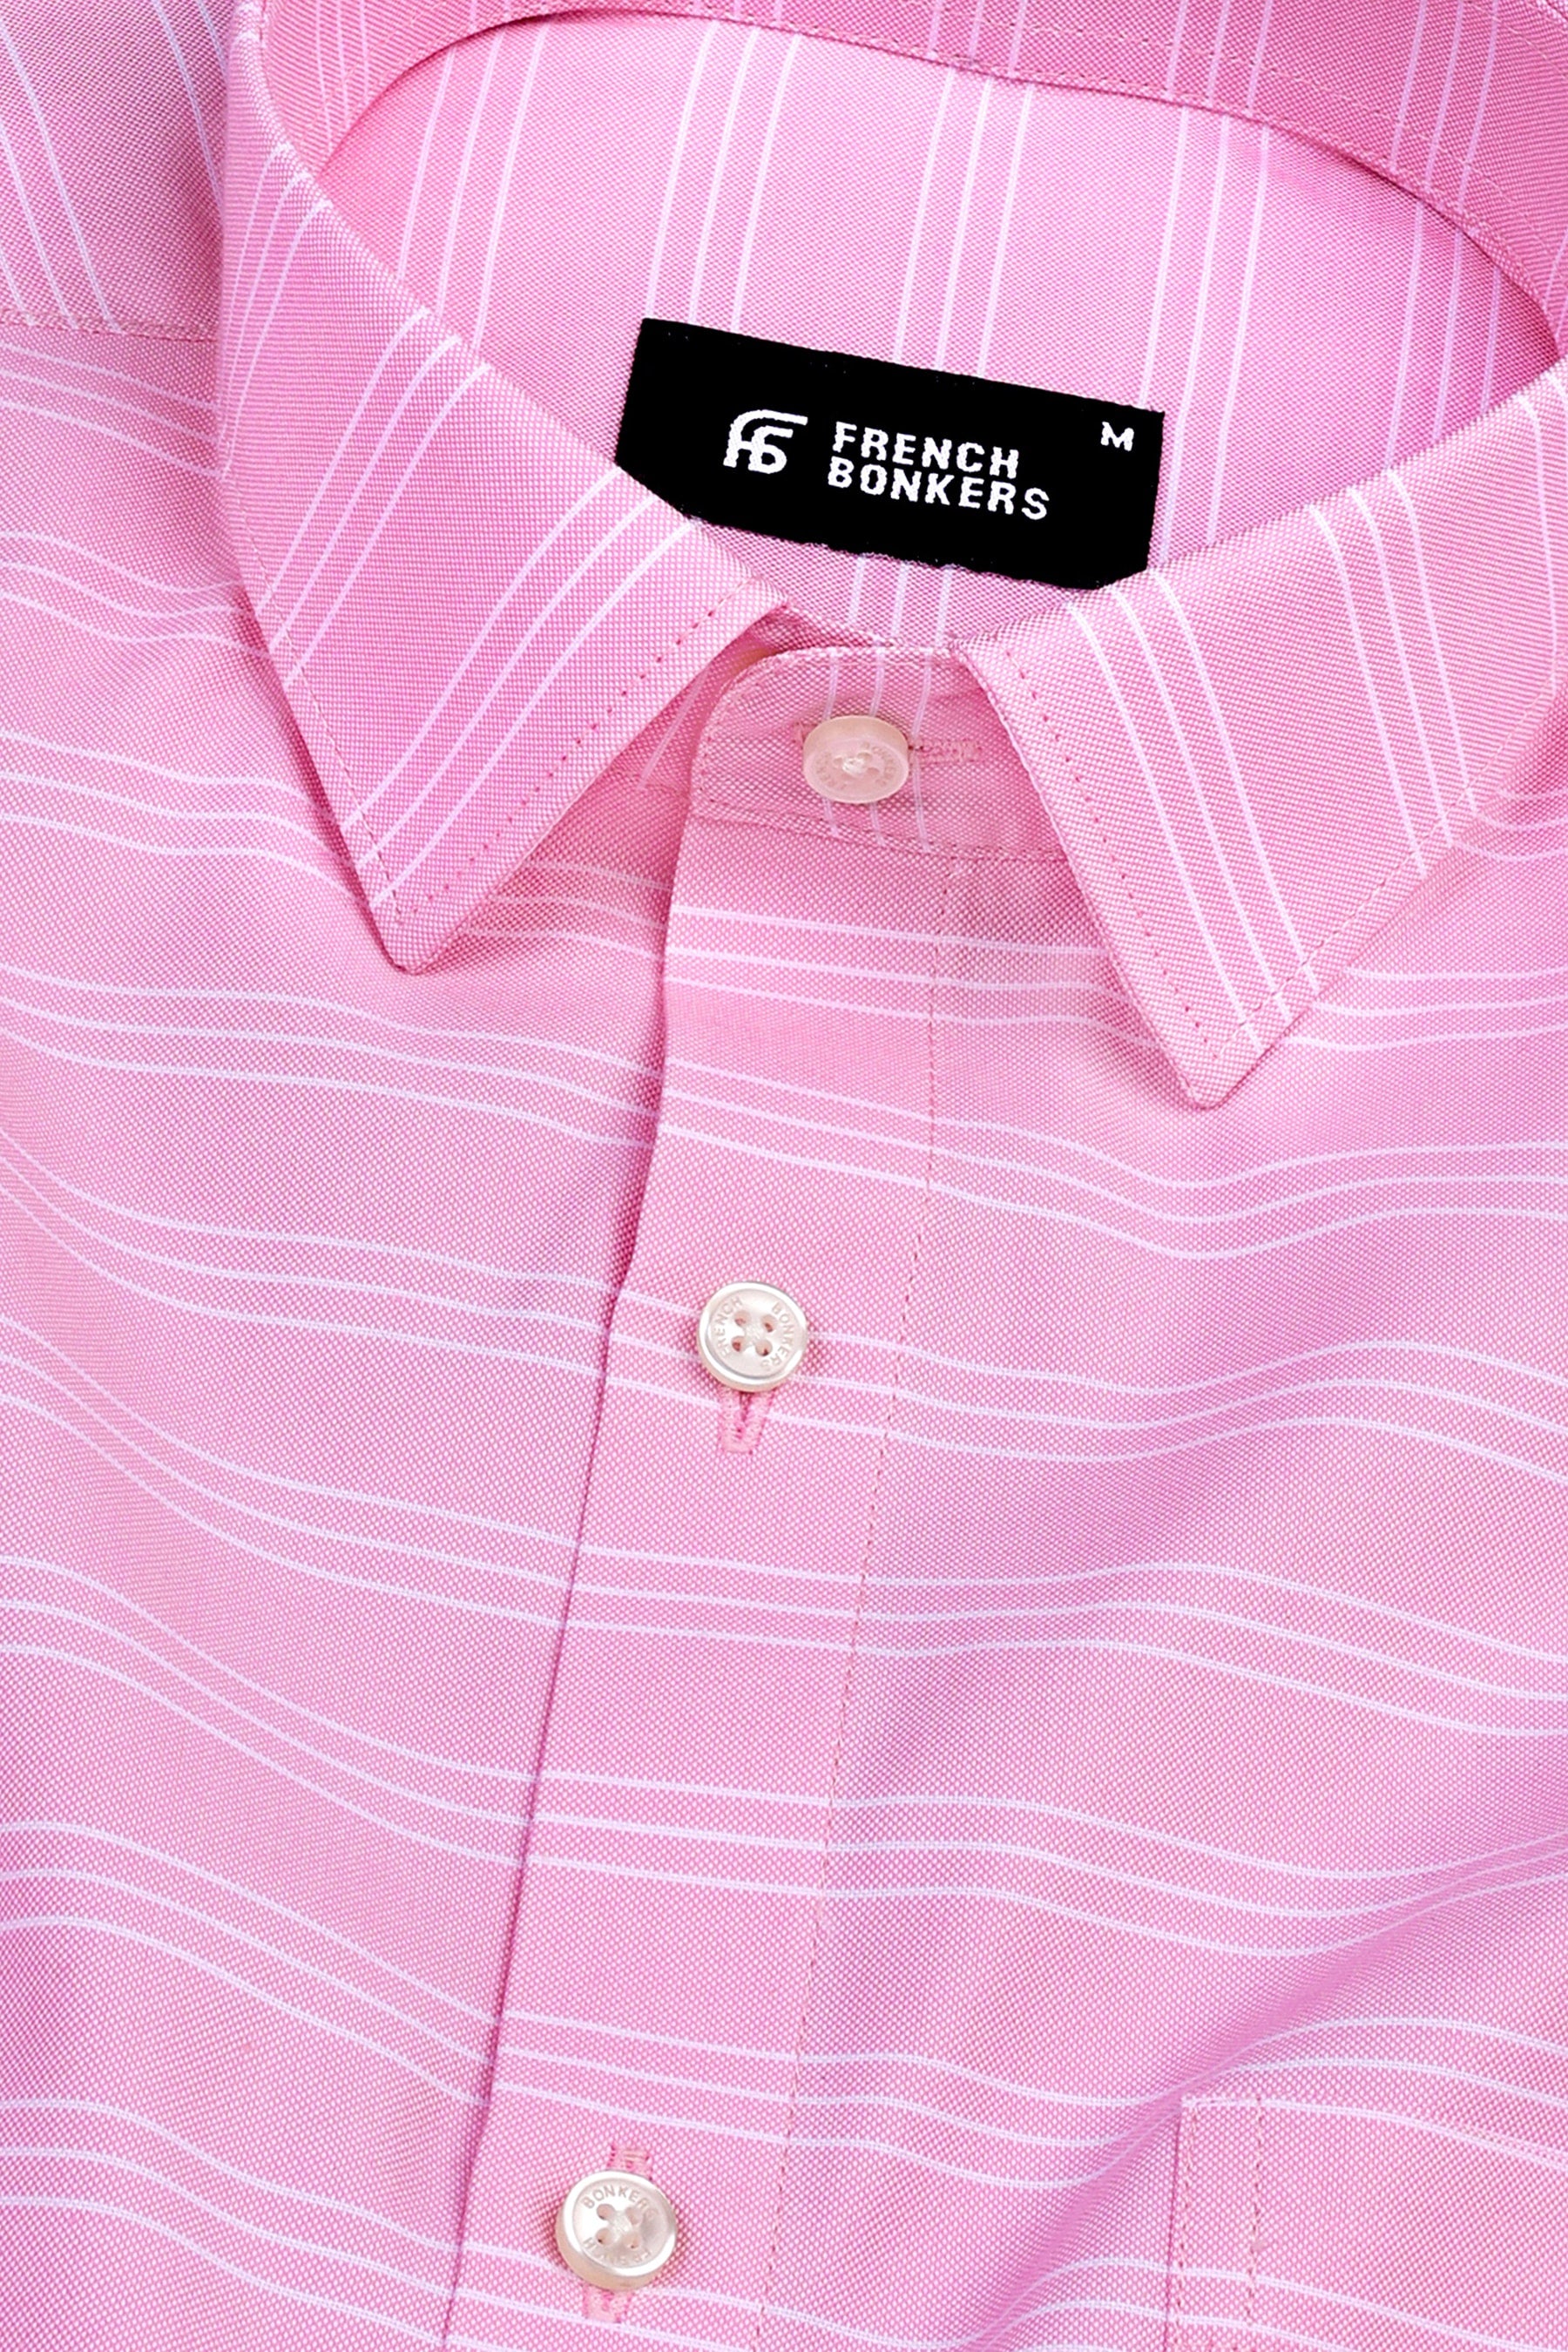 Shampoo pink with white triple line aradonis stripe shirt